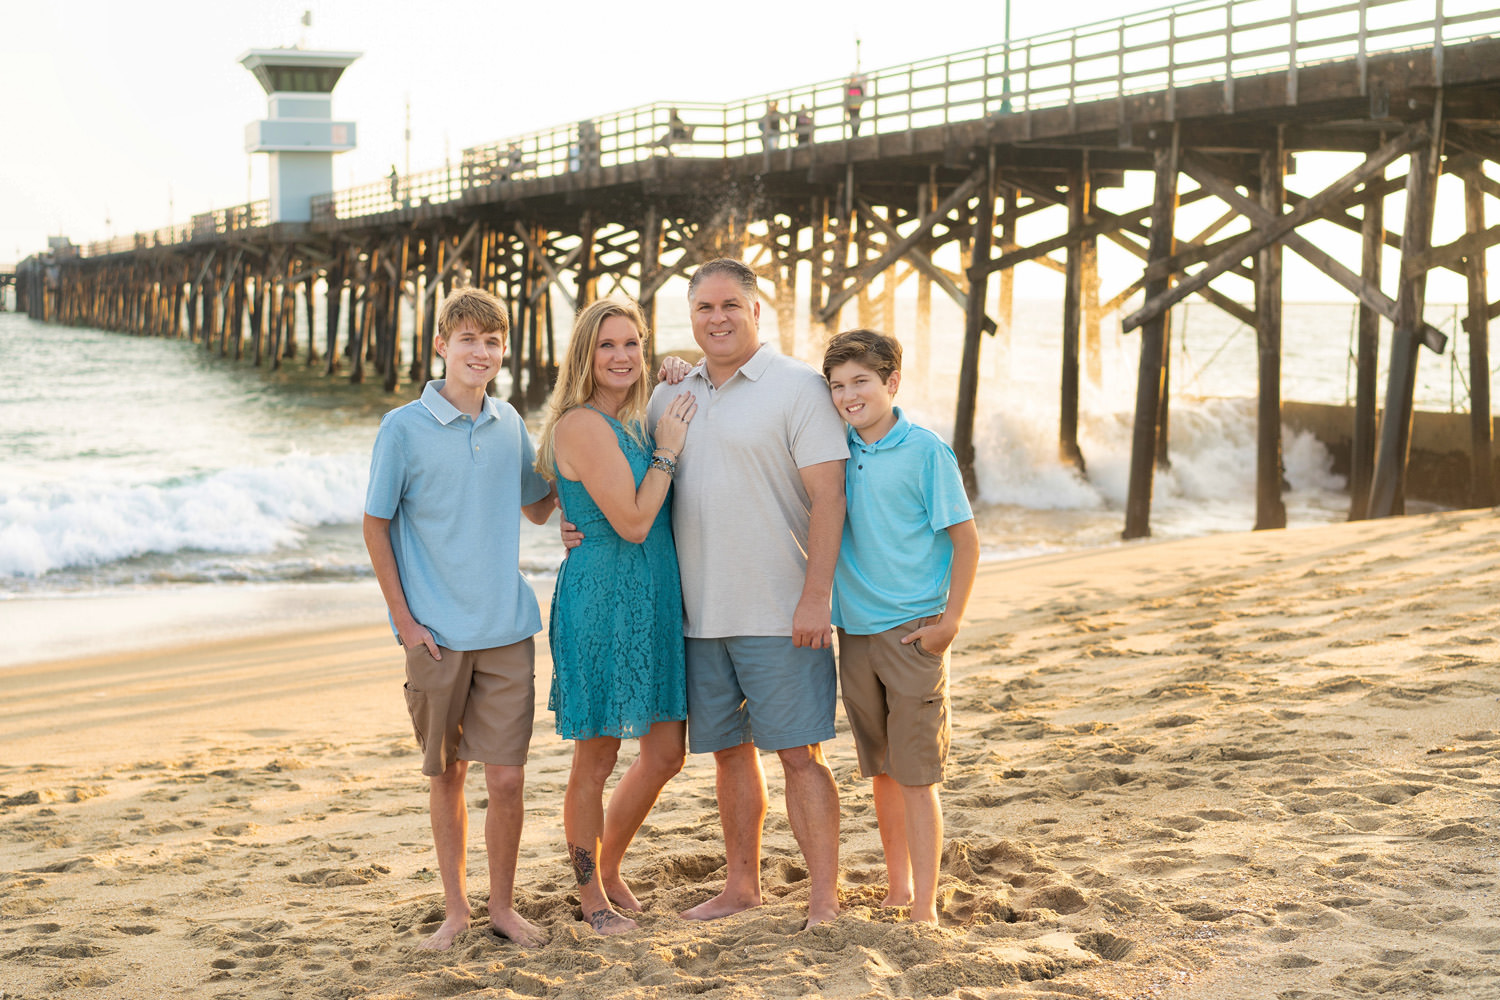 oc-family-portrait-experience-seal-beach-pier